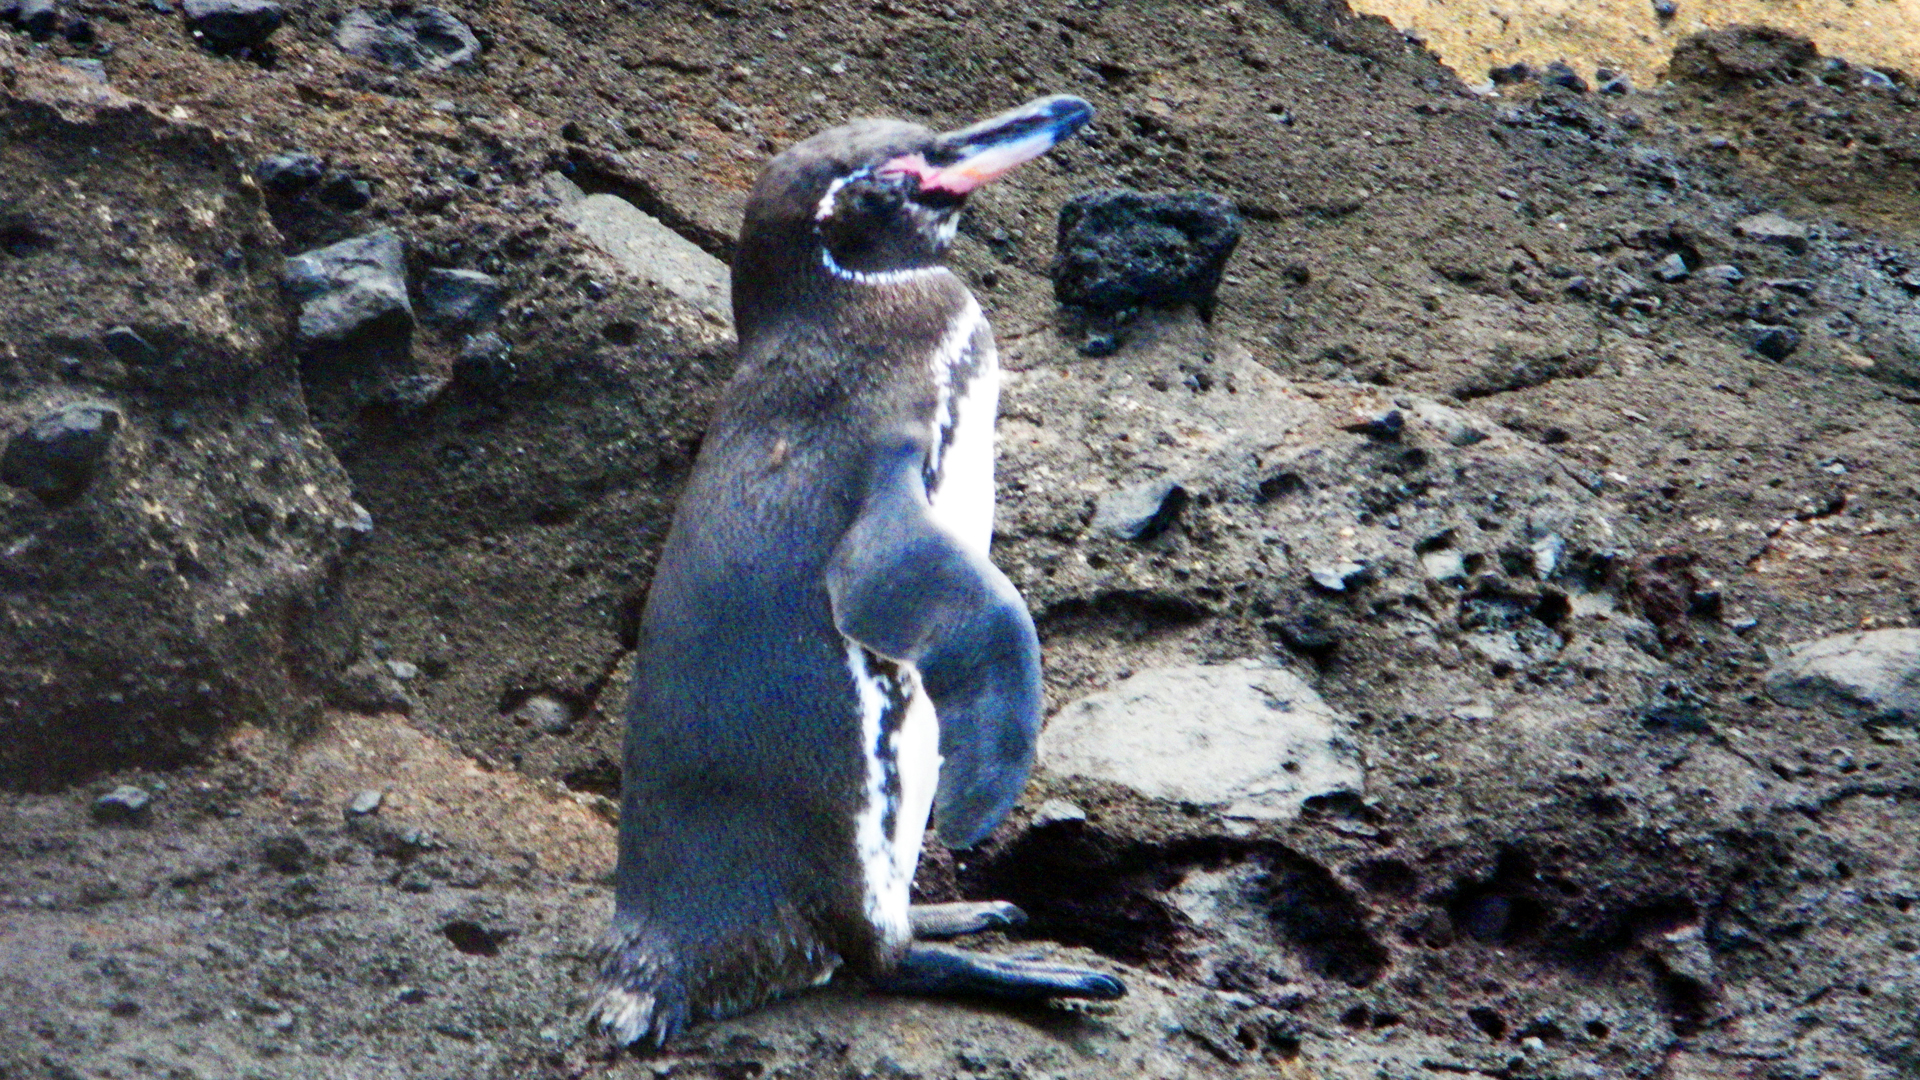 wp-content/uploads/itineraries/Galapagos/032310galapagos_taguscove_penguin (7).JPG